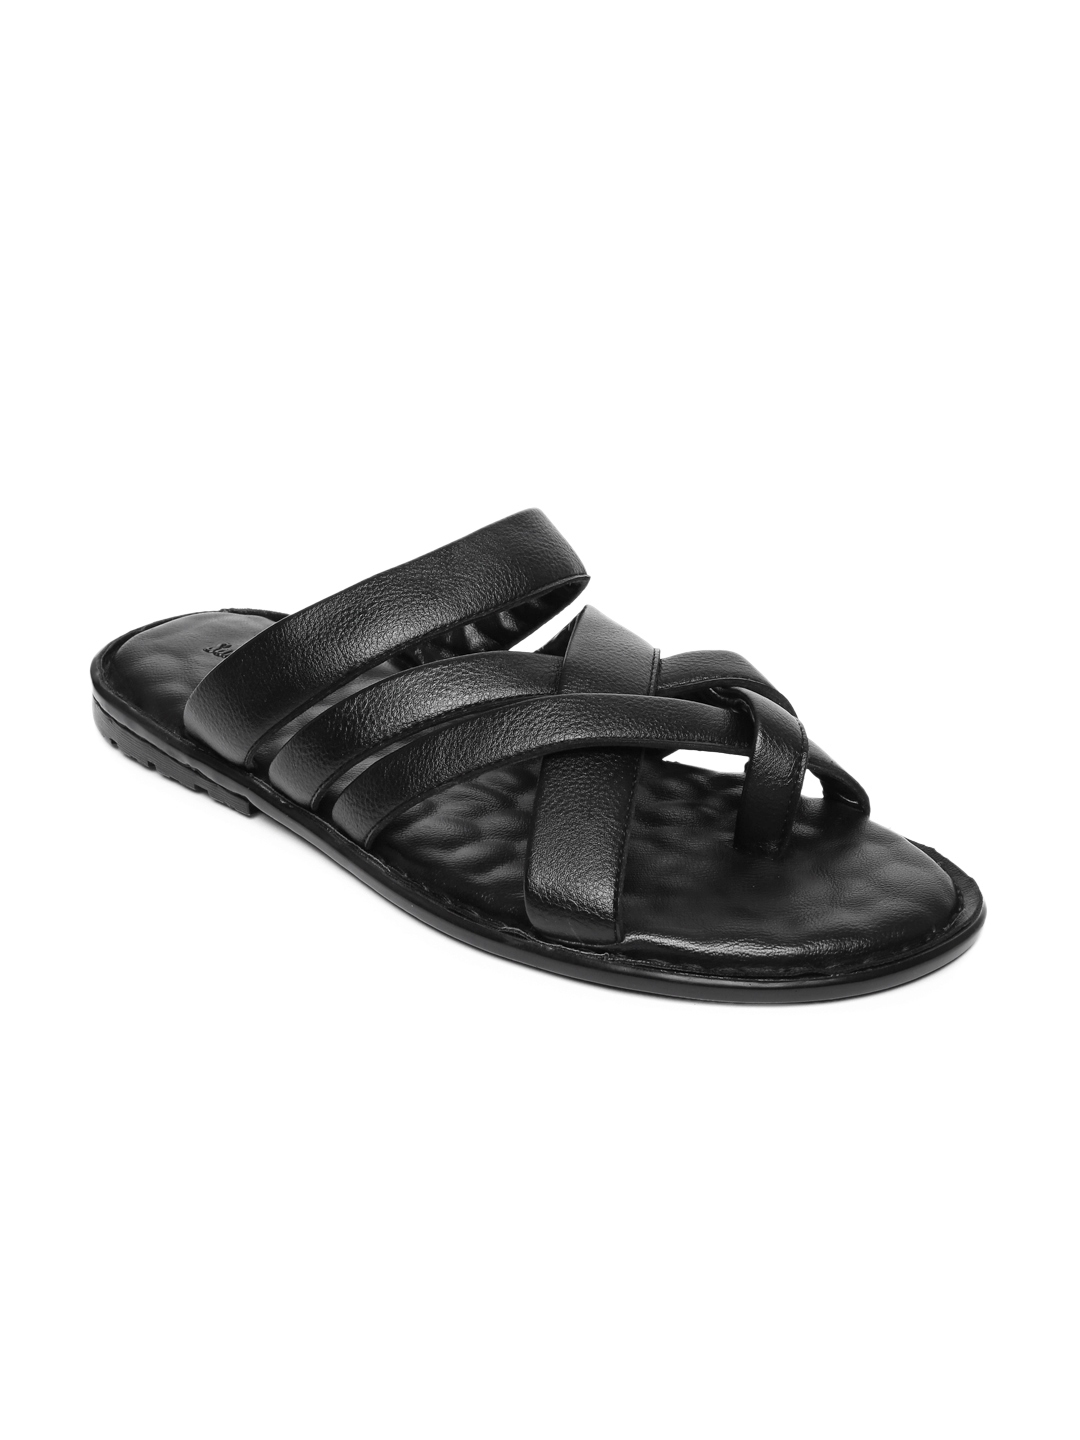 Buy San Frissco Men Black Leather Sandals - Sandals for Men 1813868 ...